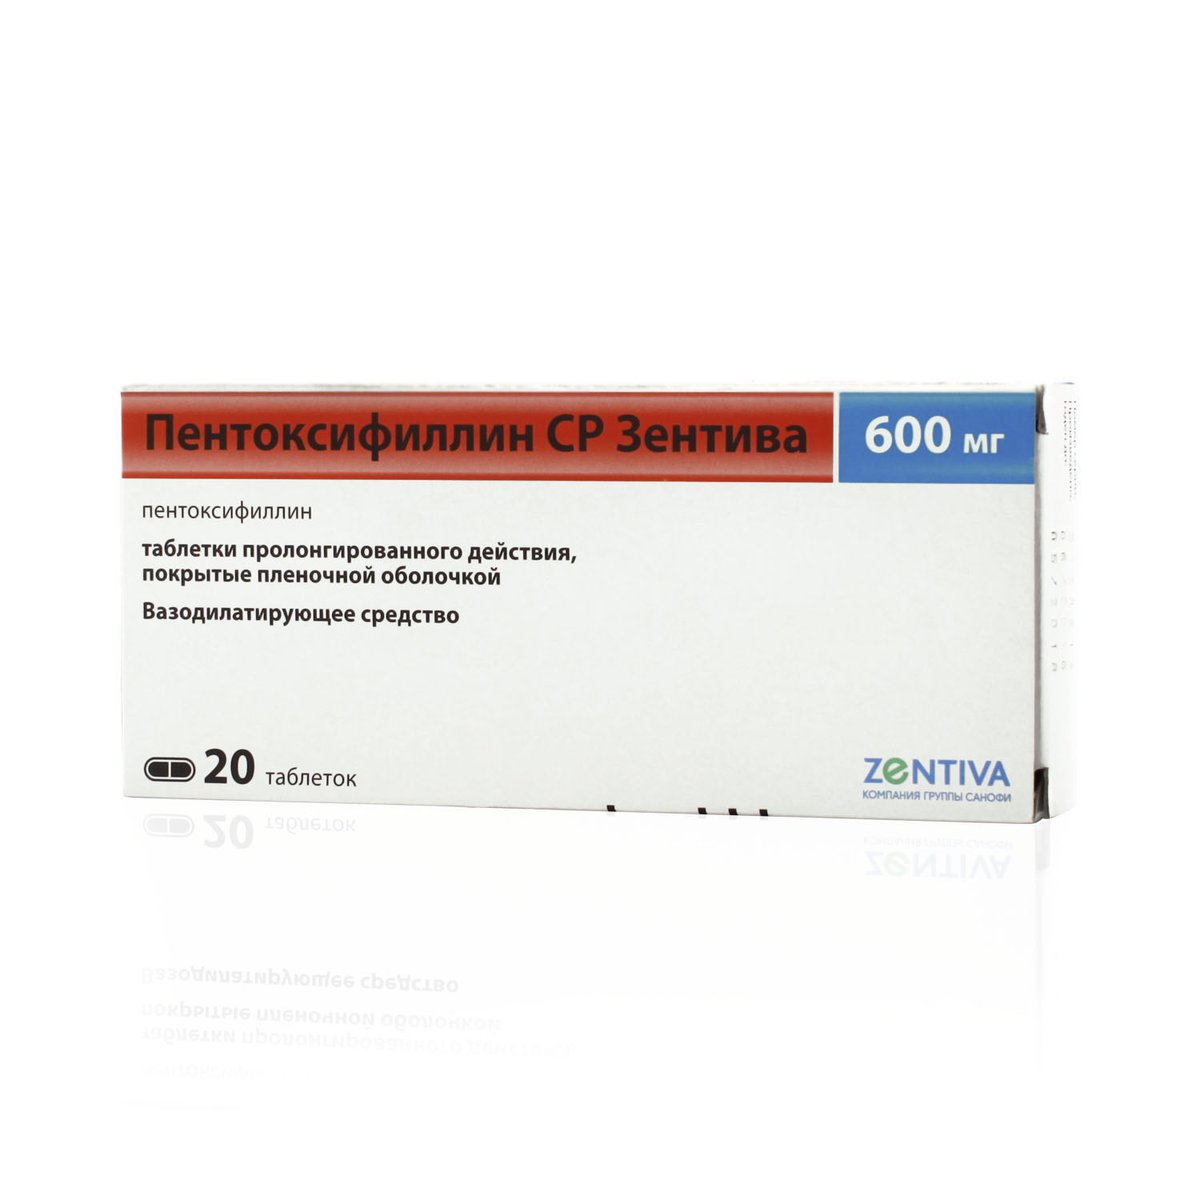 Пентоксифиллин ср зентива (таблетки, 20 шт, 600 мг) - цена,  .